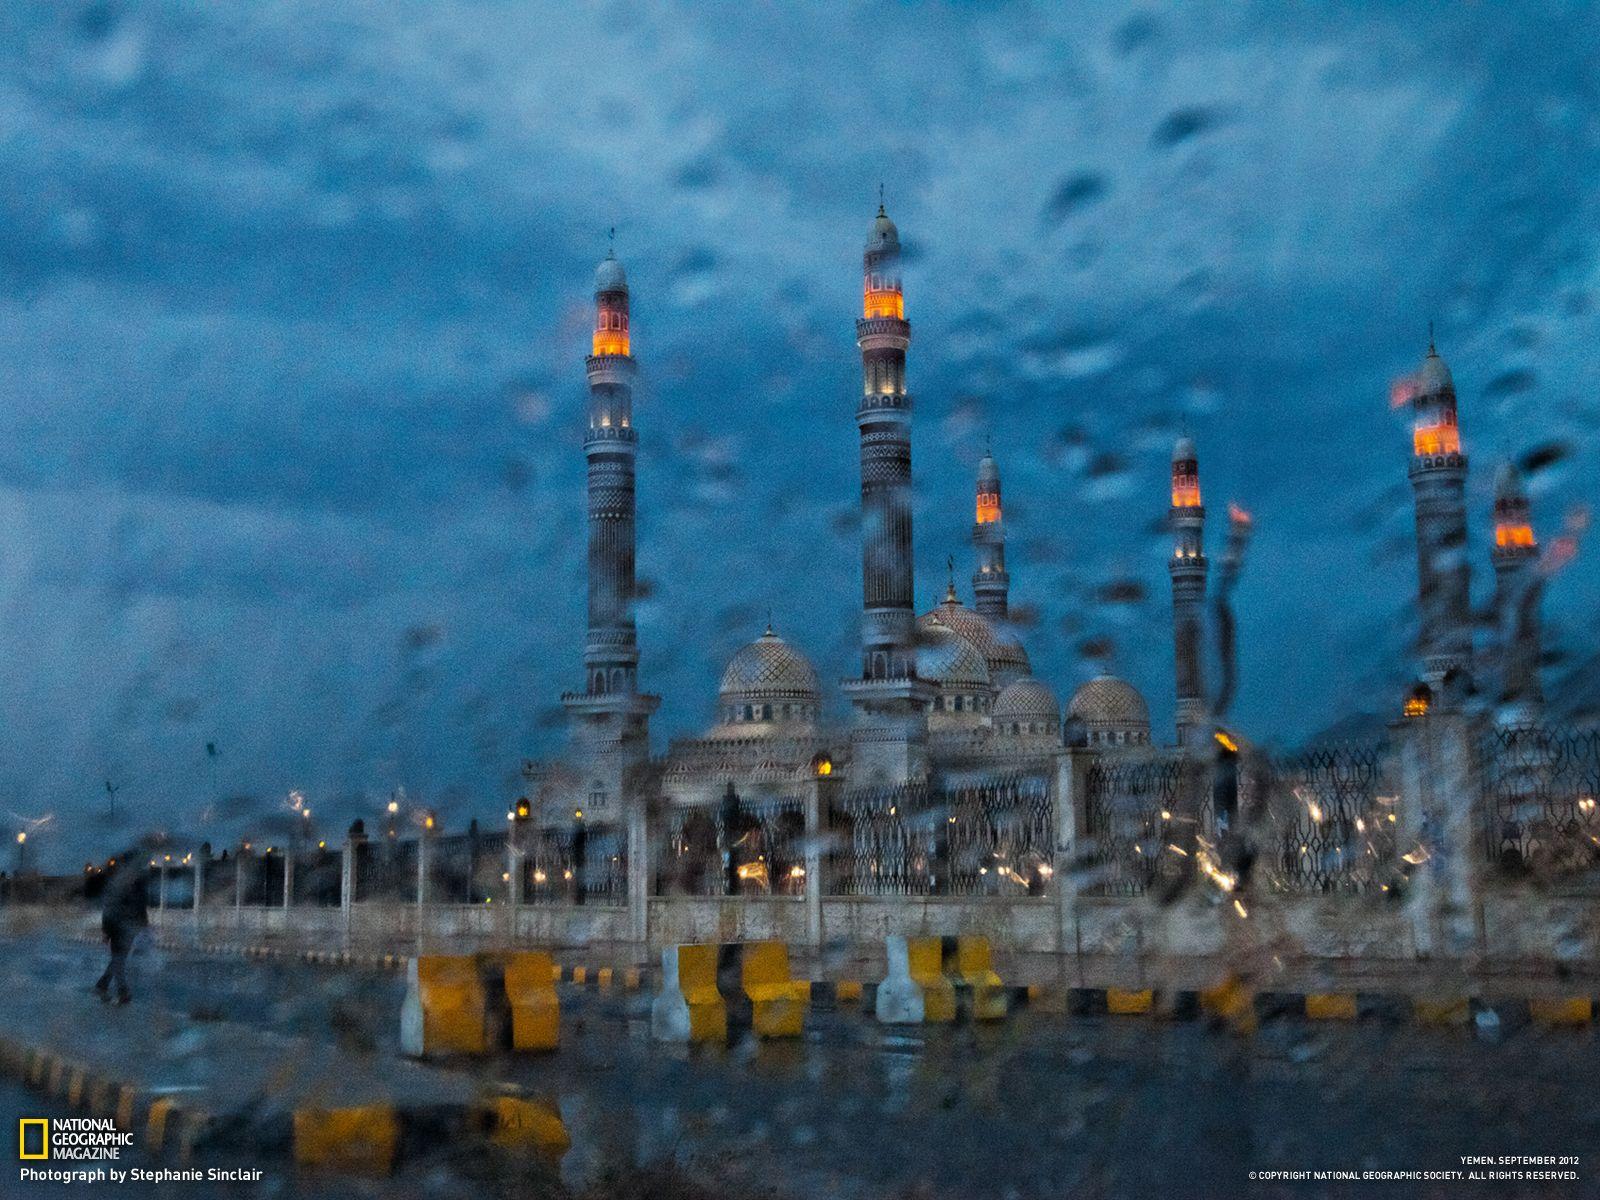 Al Saleh Mosque, Yemen Photograph by Stephanie Sinclair, National